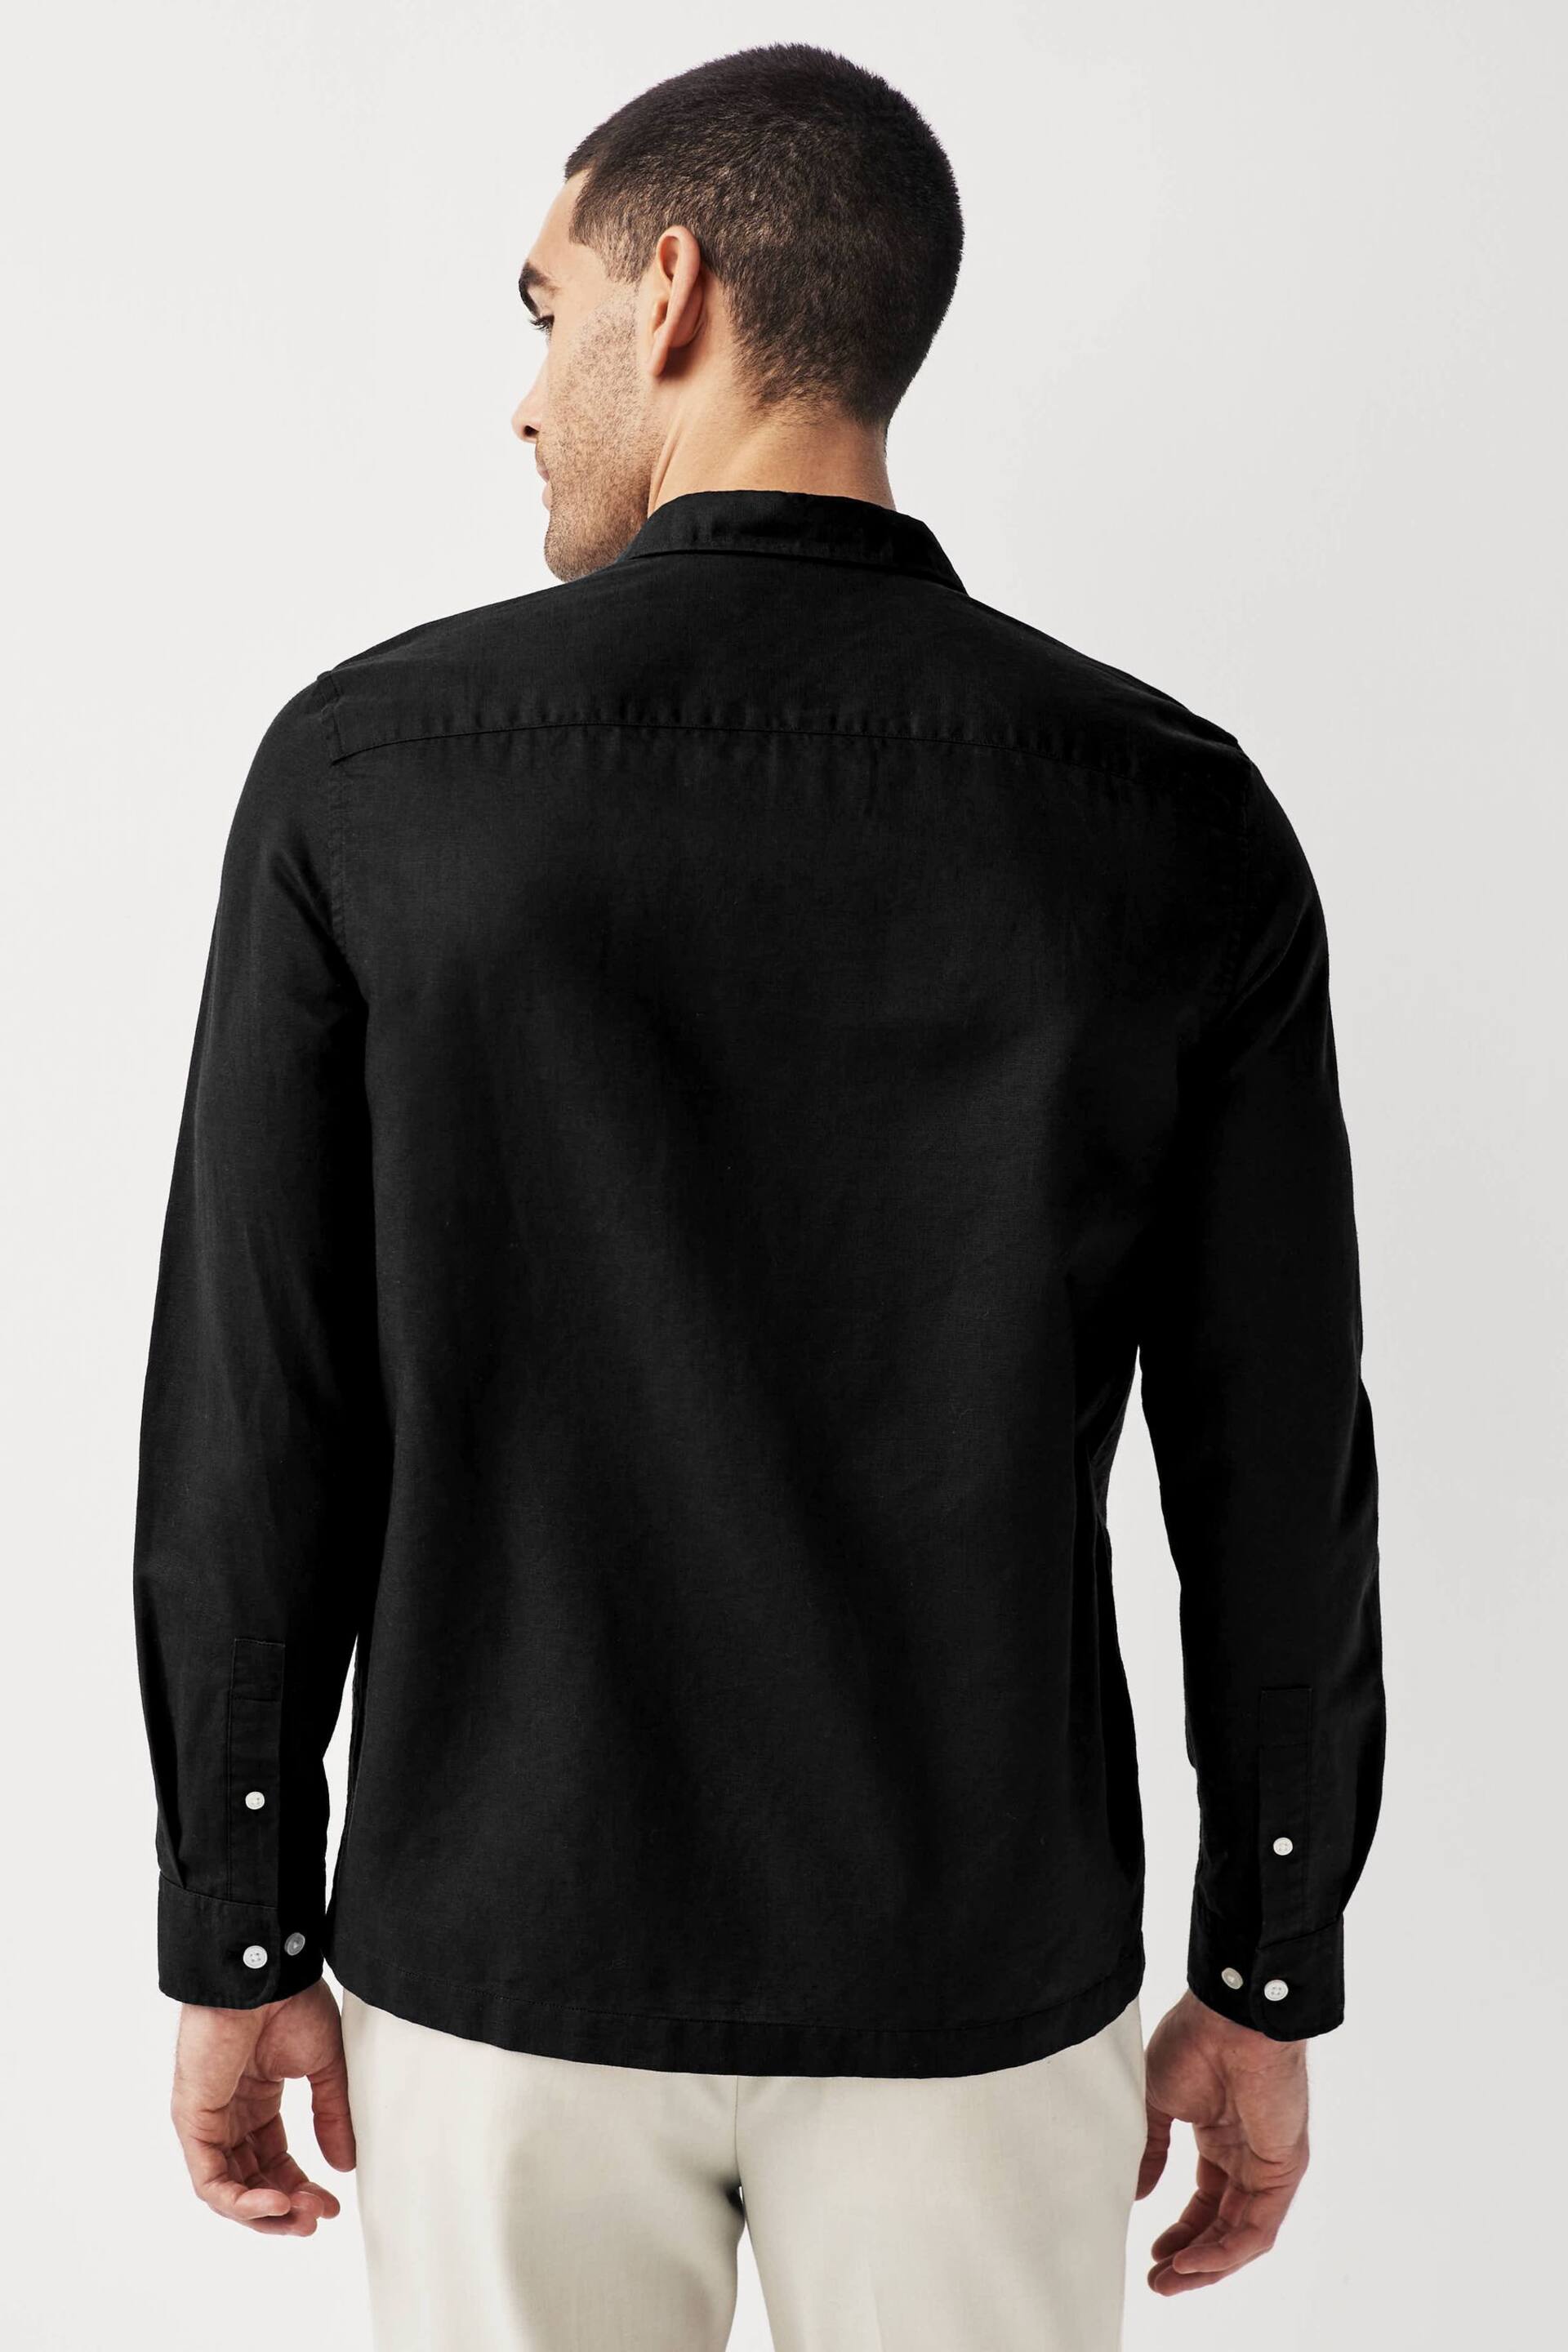 Black Linen Blend Long Sleeve Shirt - Image 3 of 7